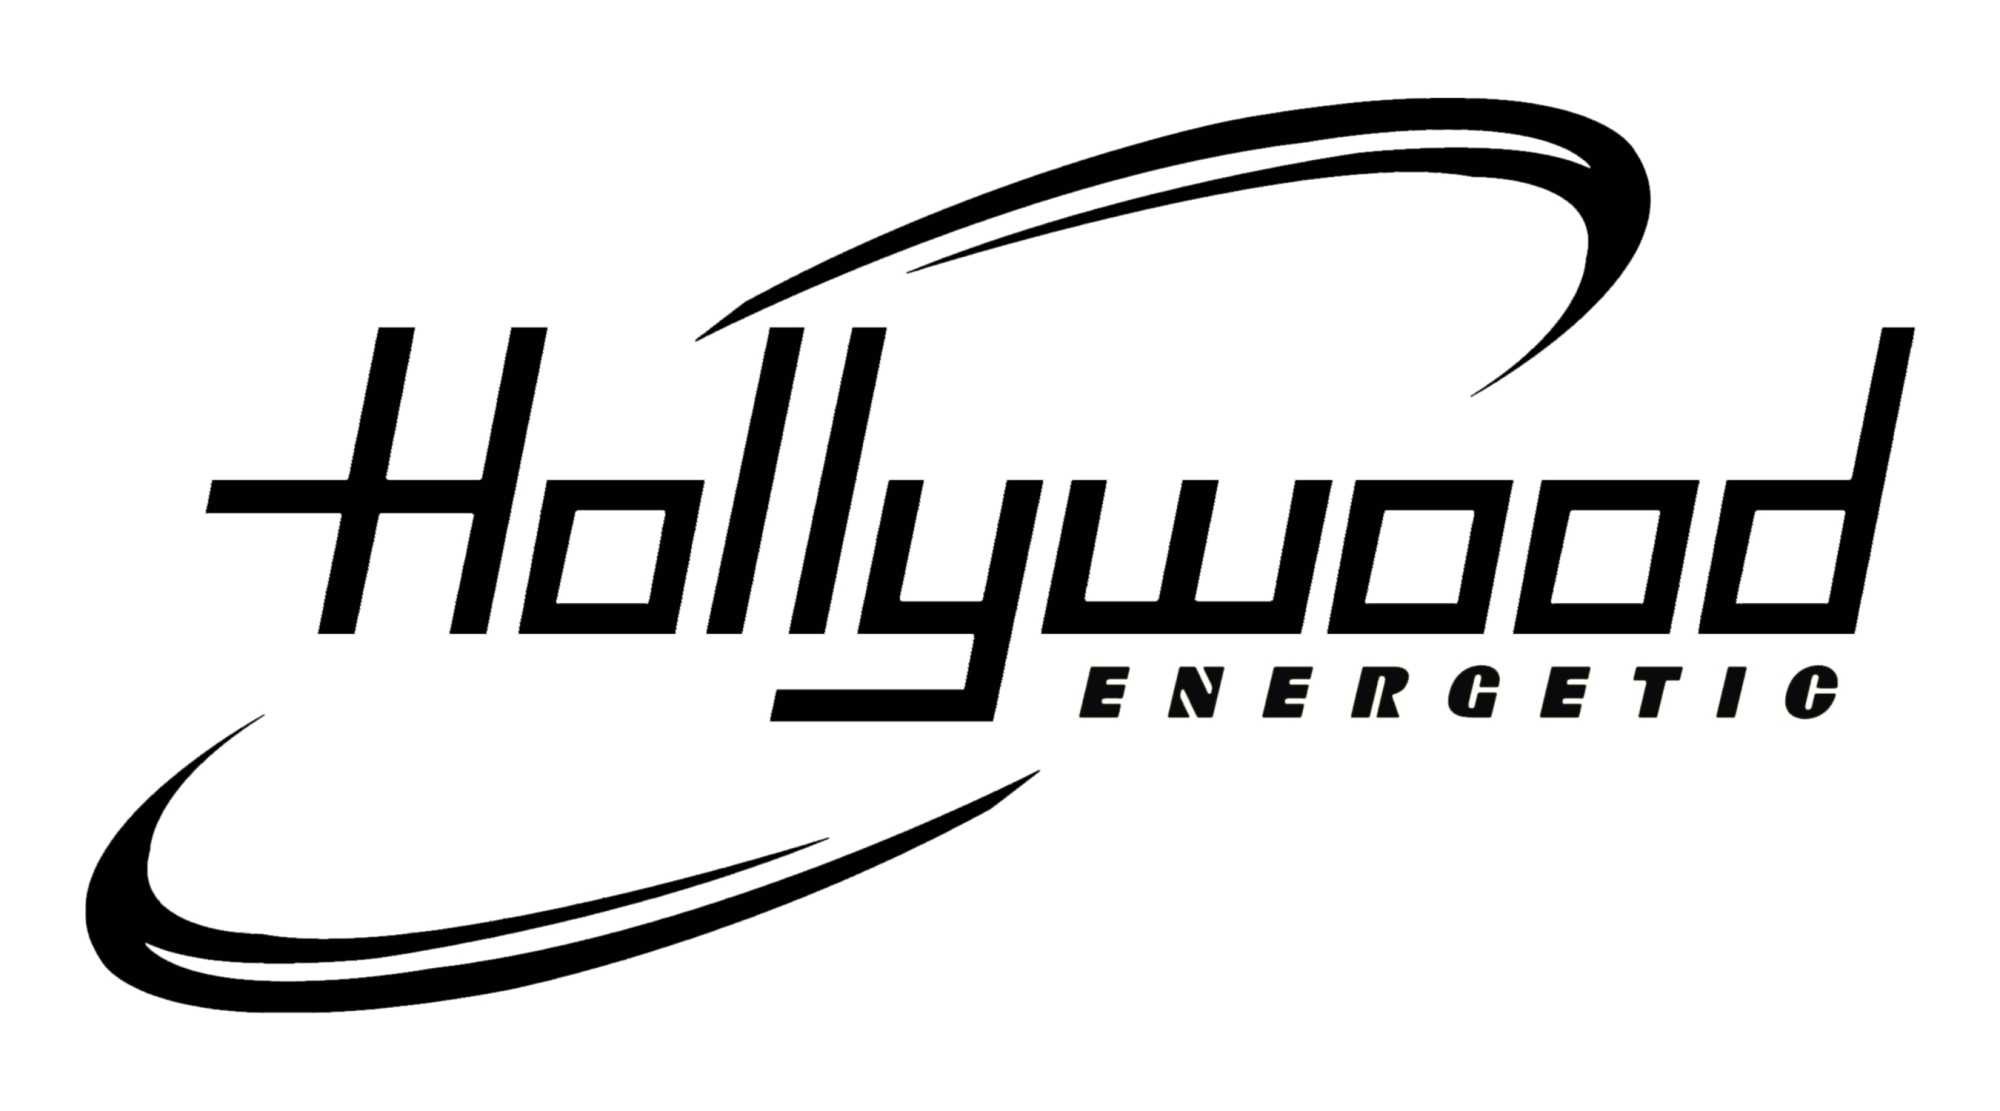 Hollywood HIGH CURRENT 12V AGM Batterie HC 120 120Ah bis 4000  Watt-CHW-HC-0120